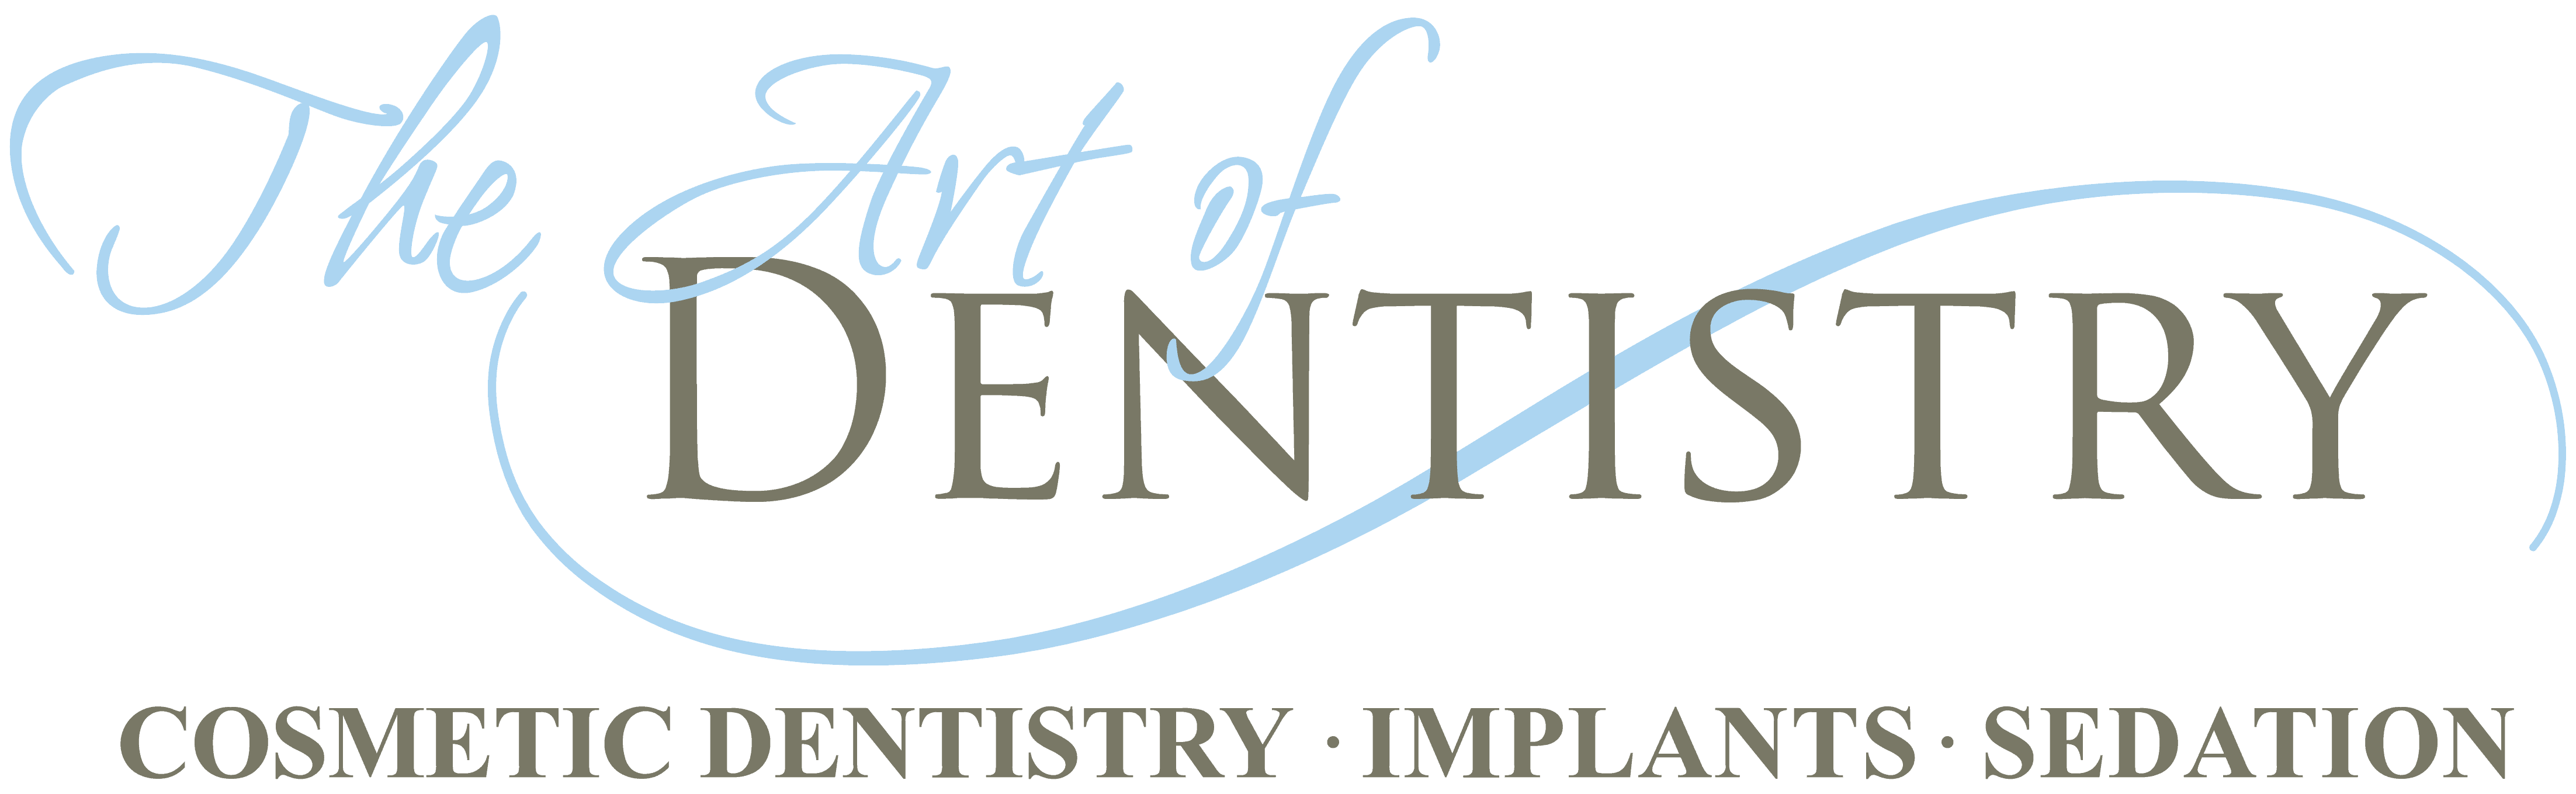 Company logo of The Art of Dentistry - Brian Fann, DDS